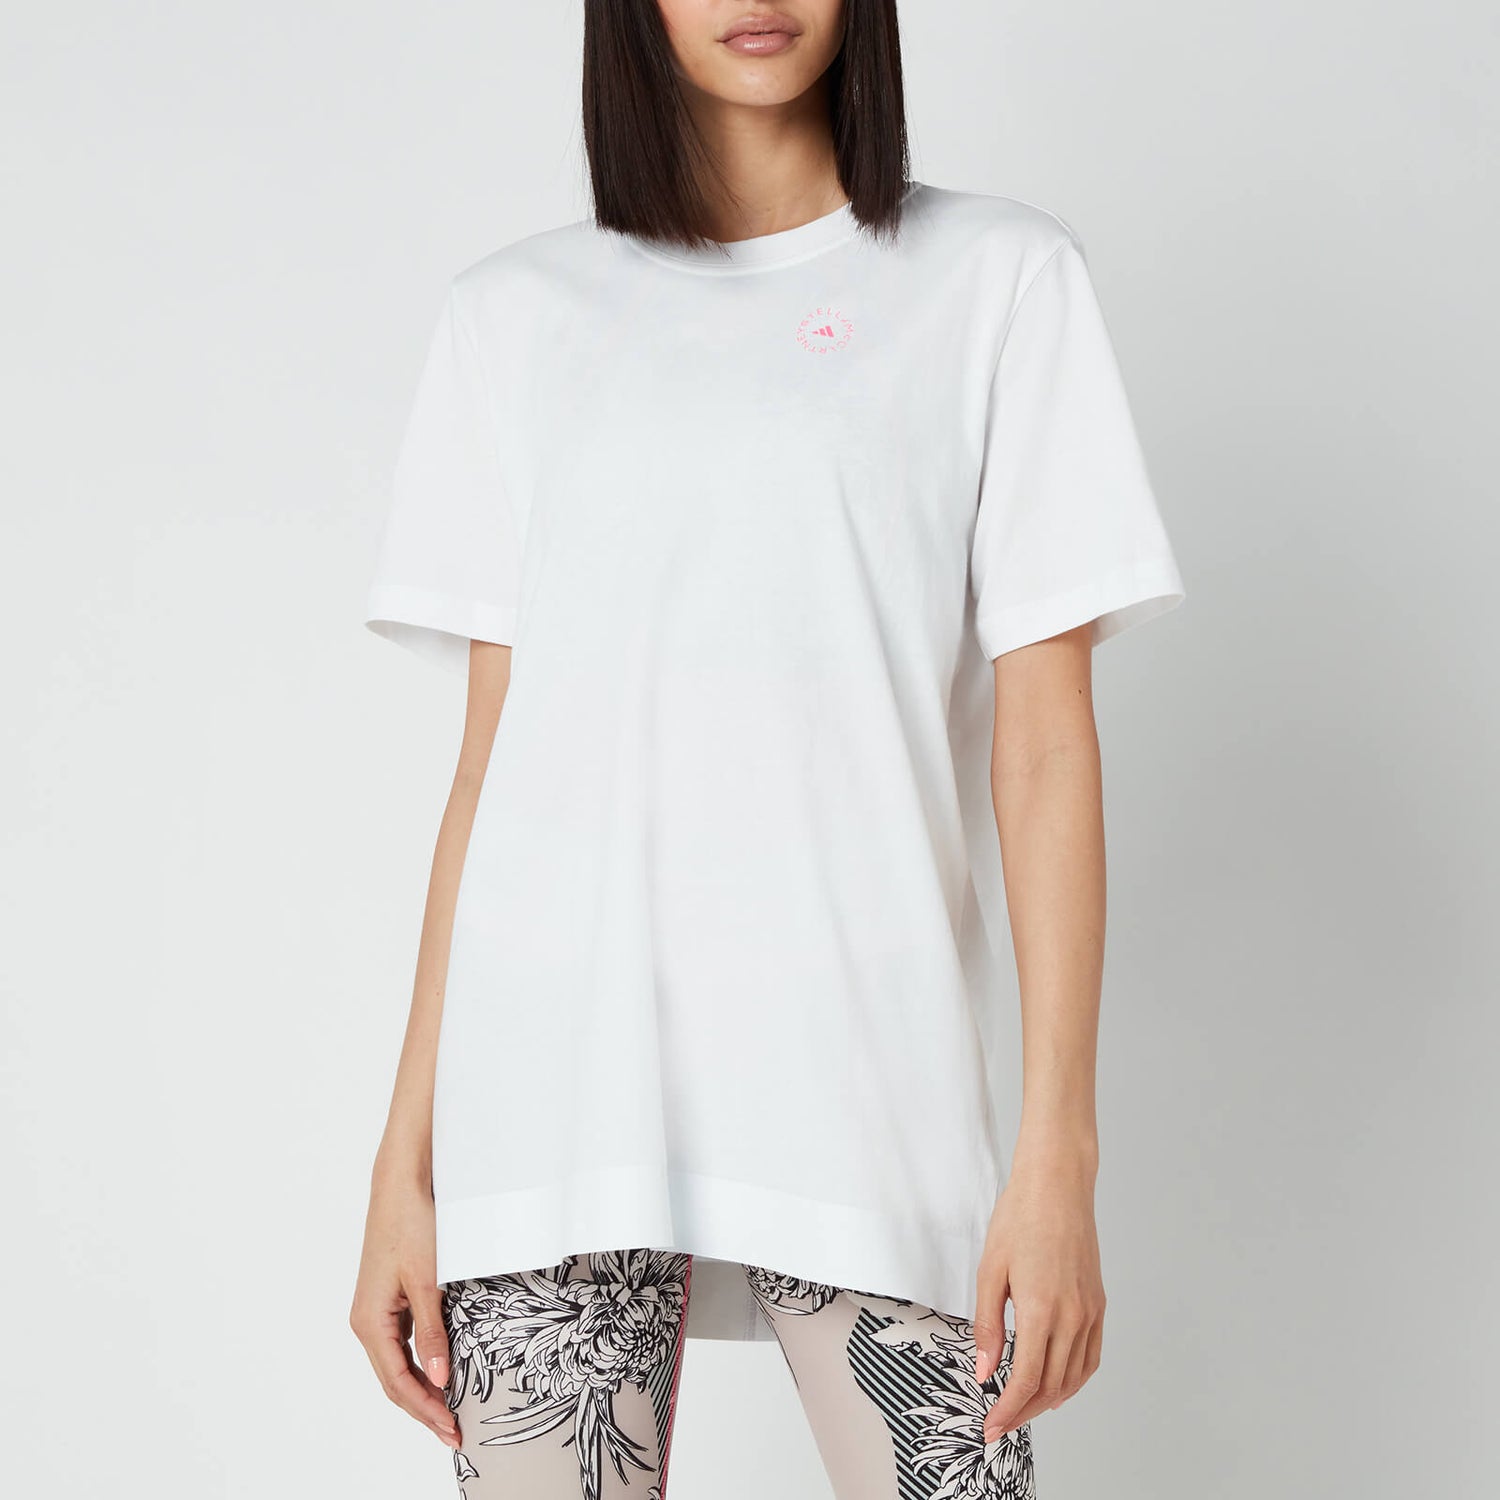 adidas by Stella McCartney Women's Cotton T-Shirt - White